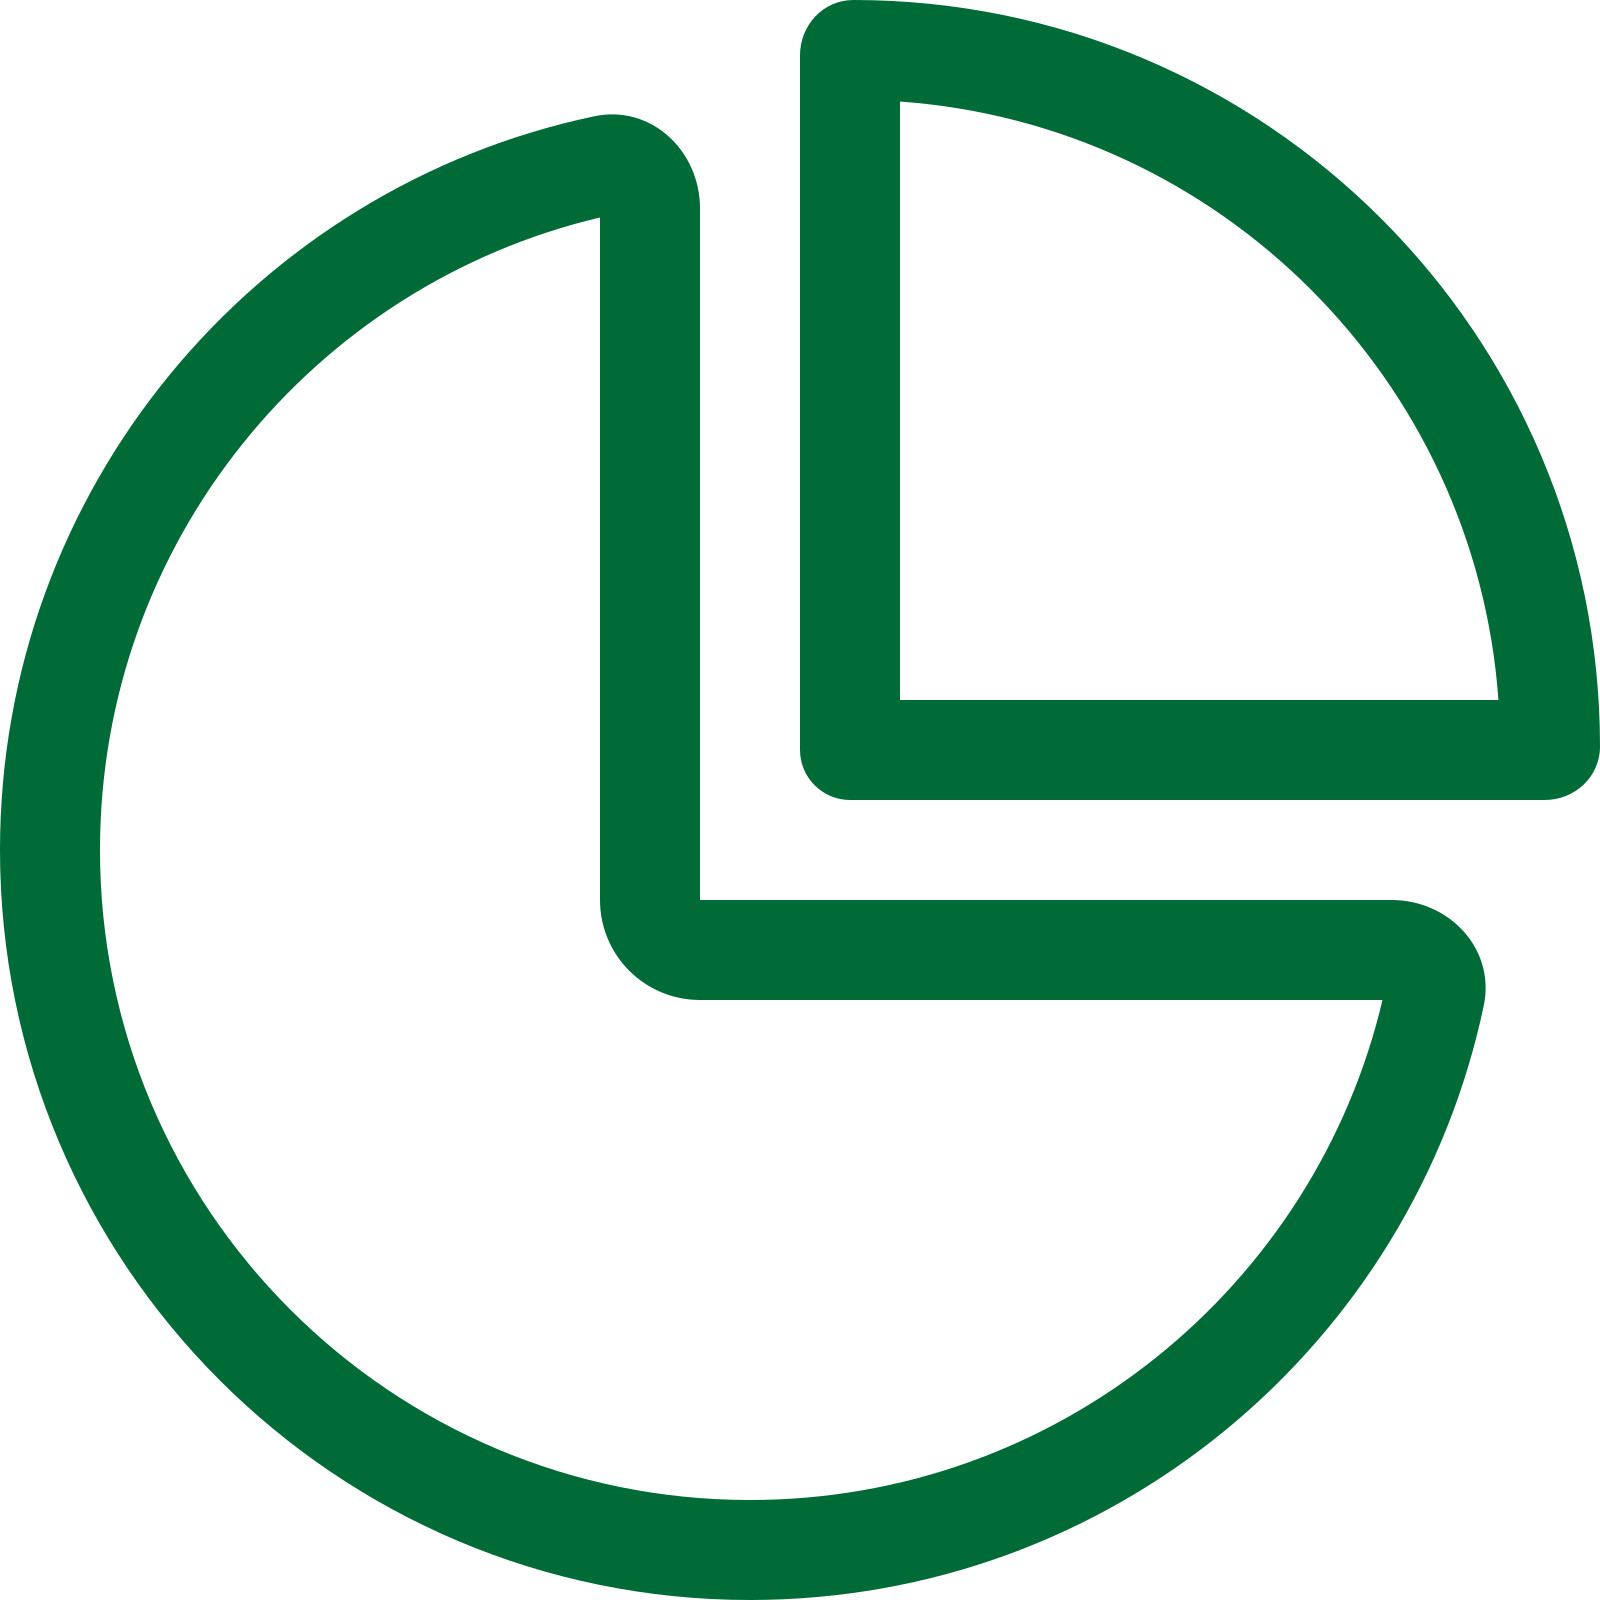 Green pie chart icon